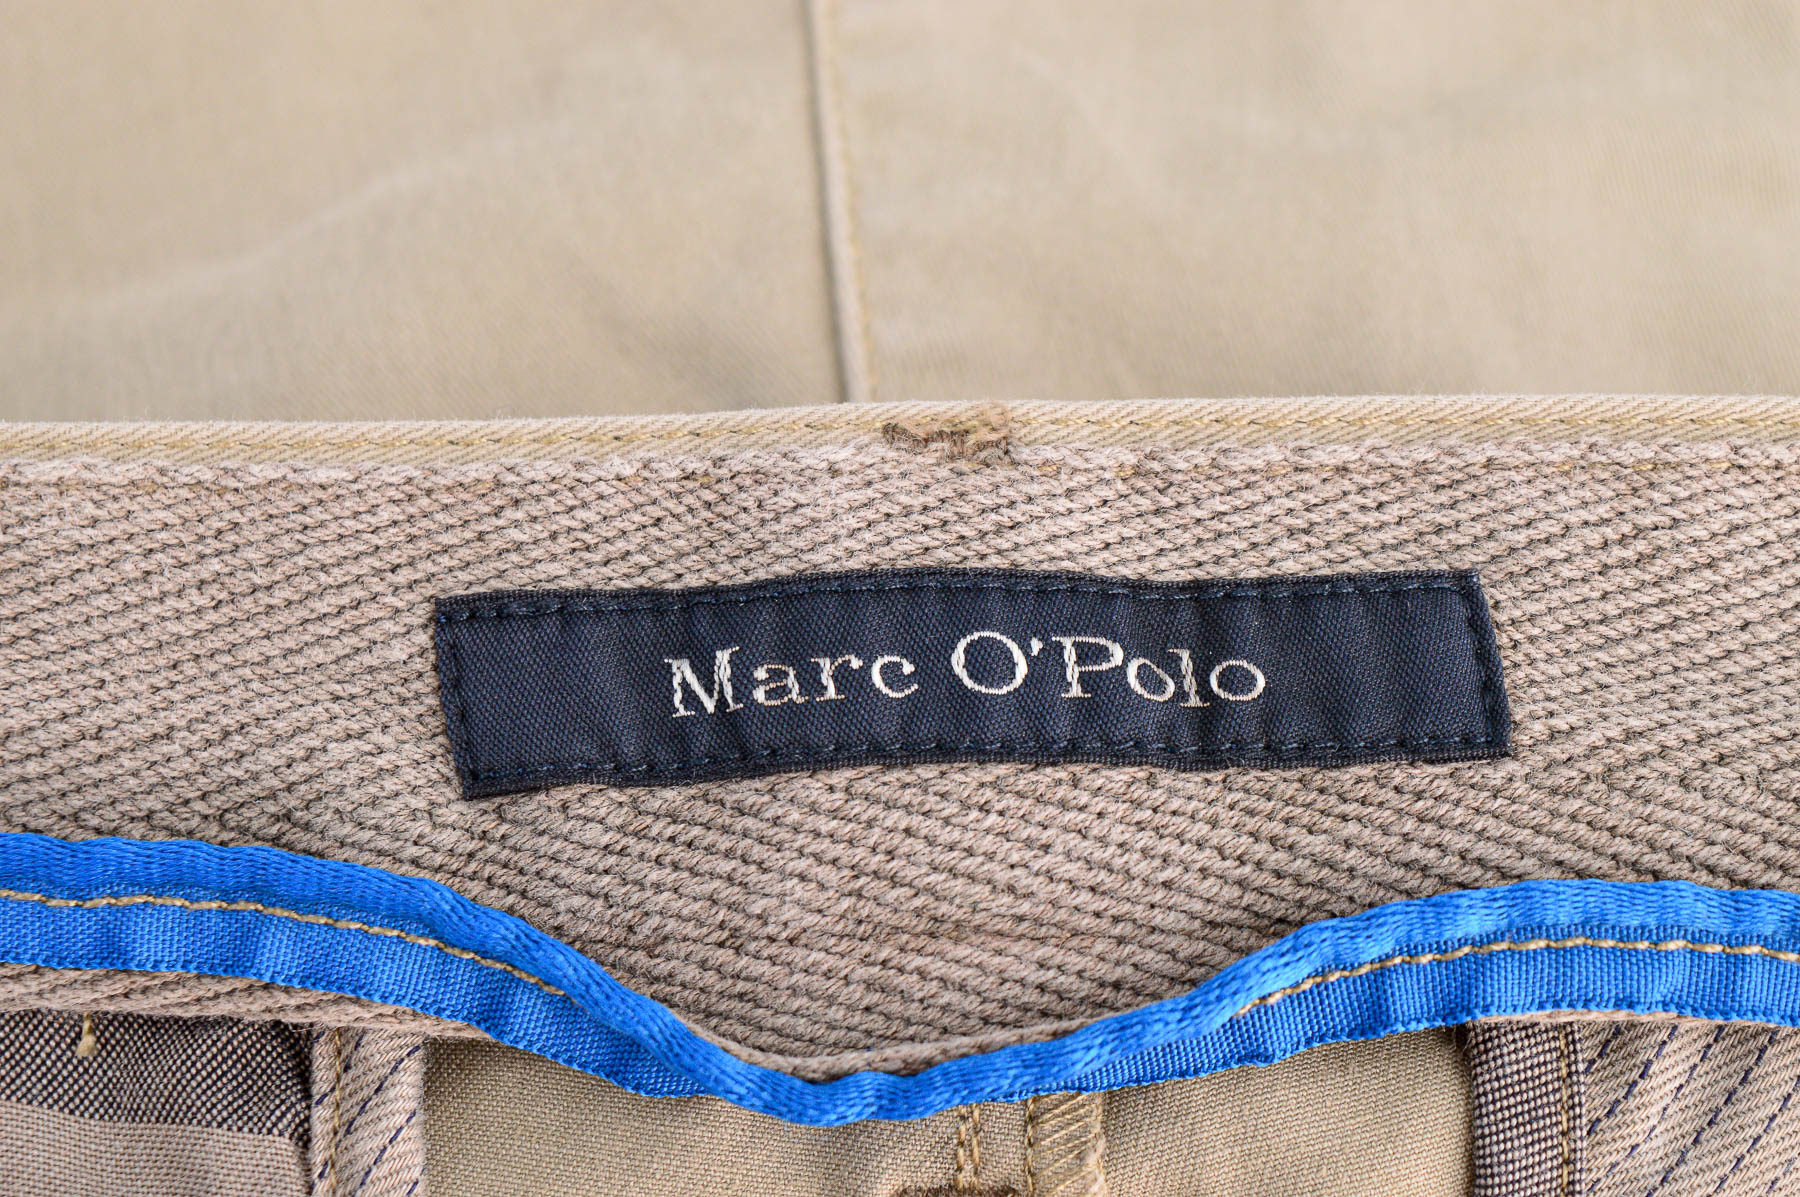 Men's trousers - Marc O' Polo - 2